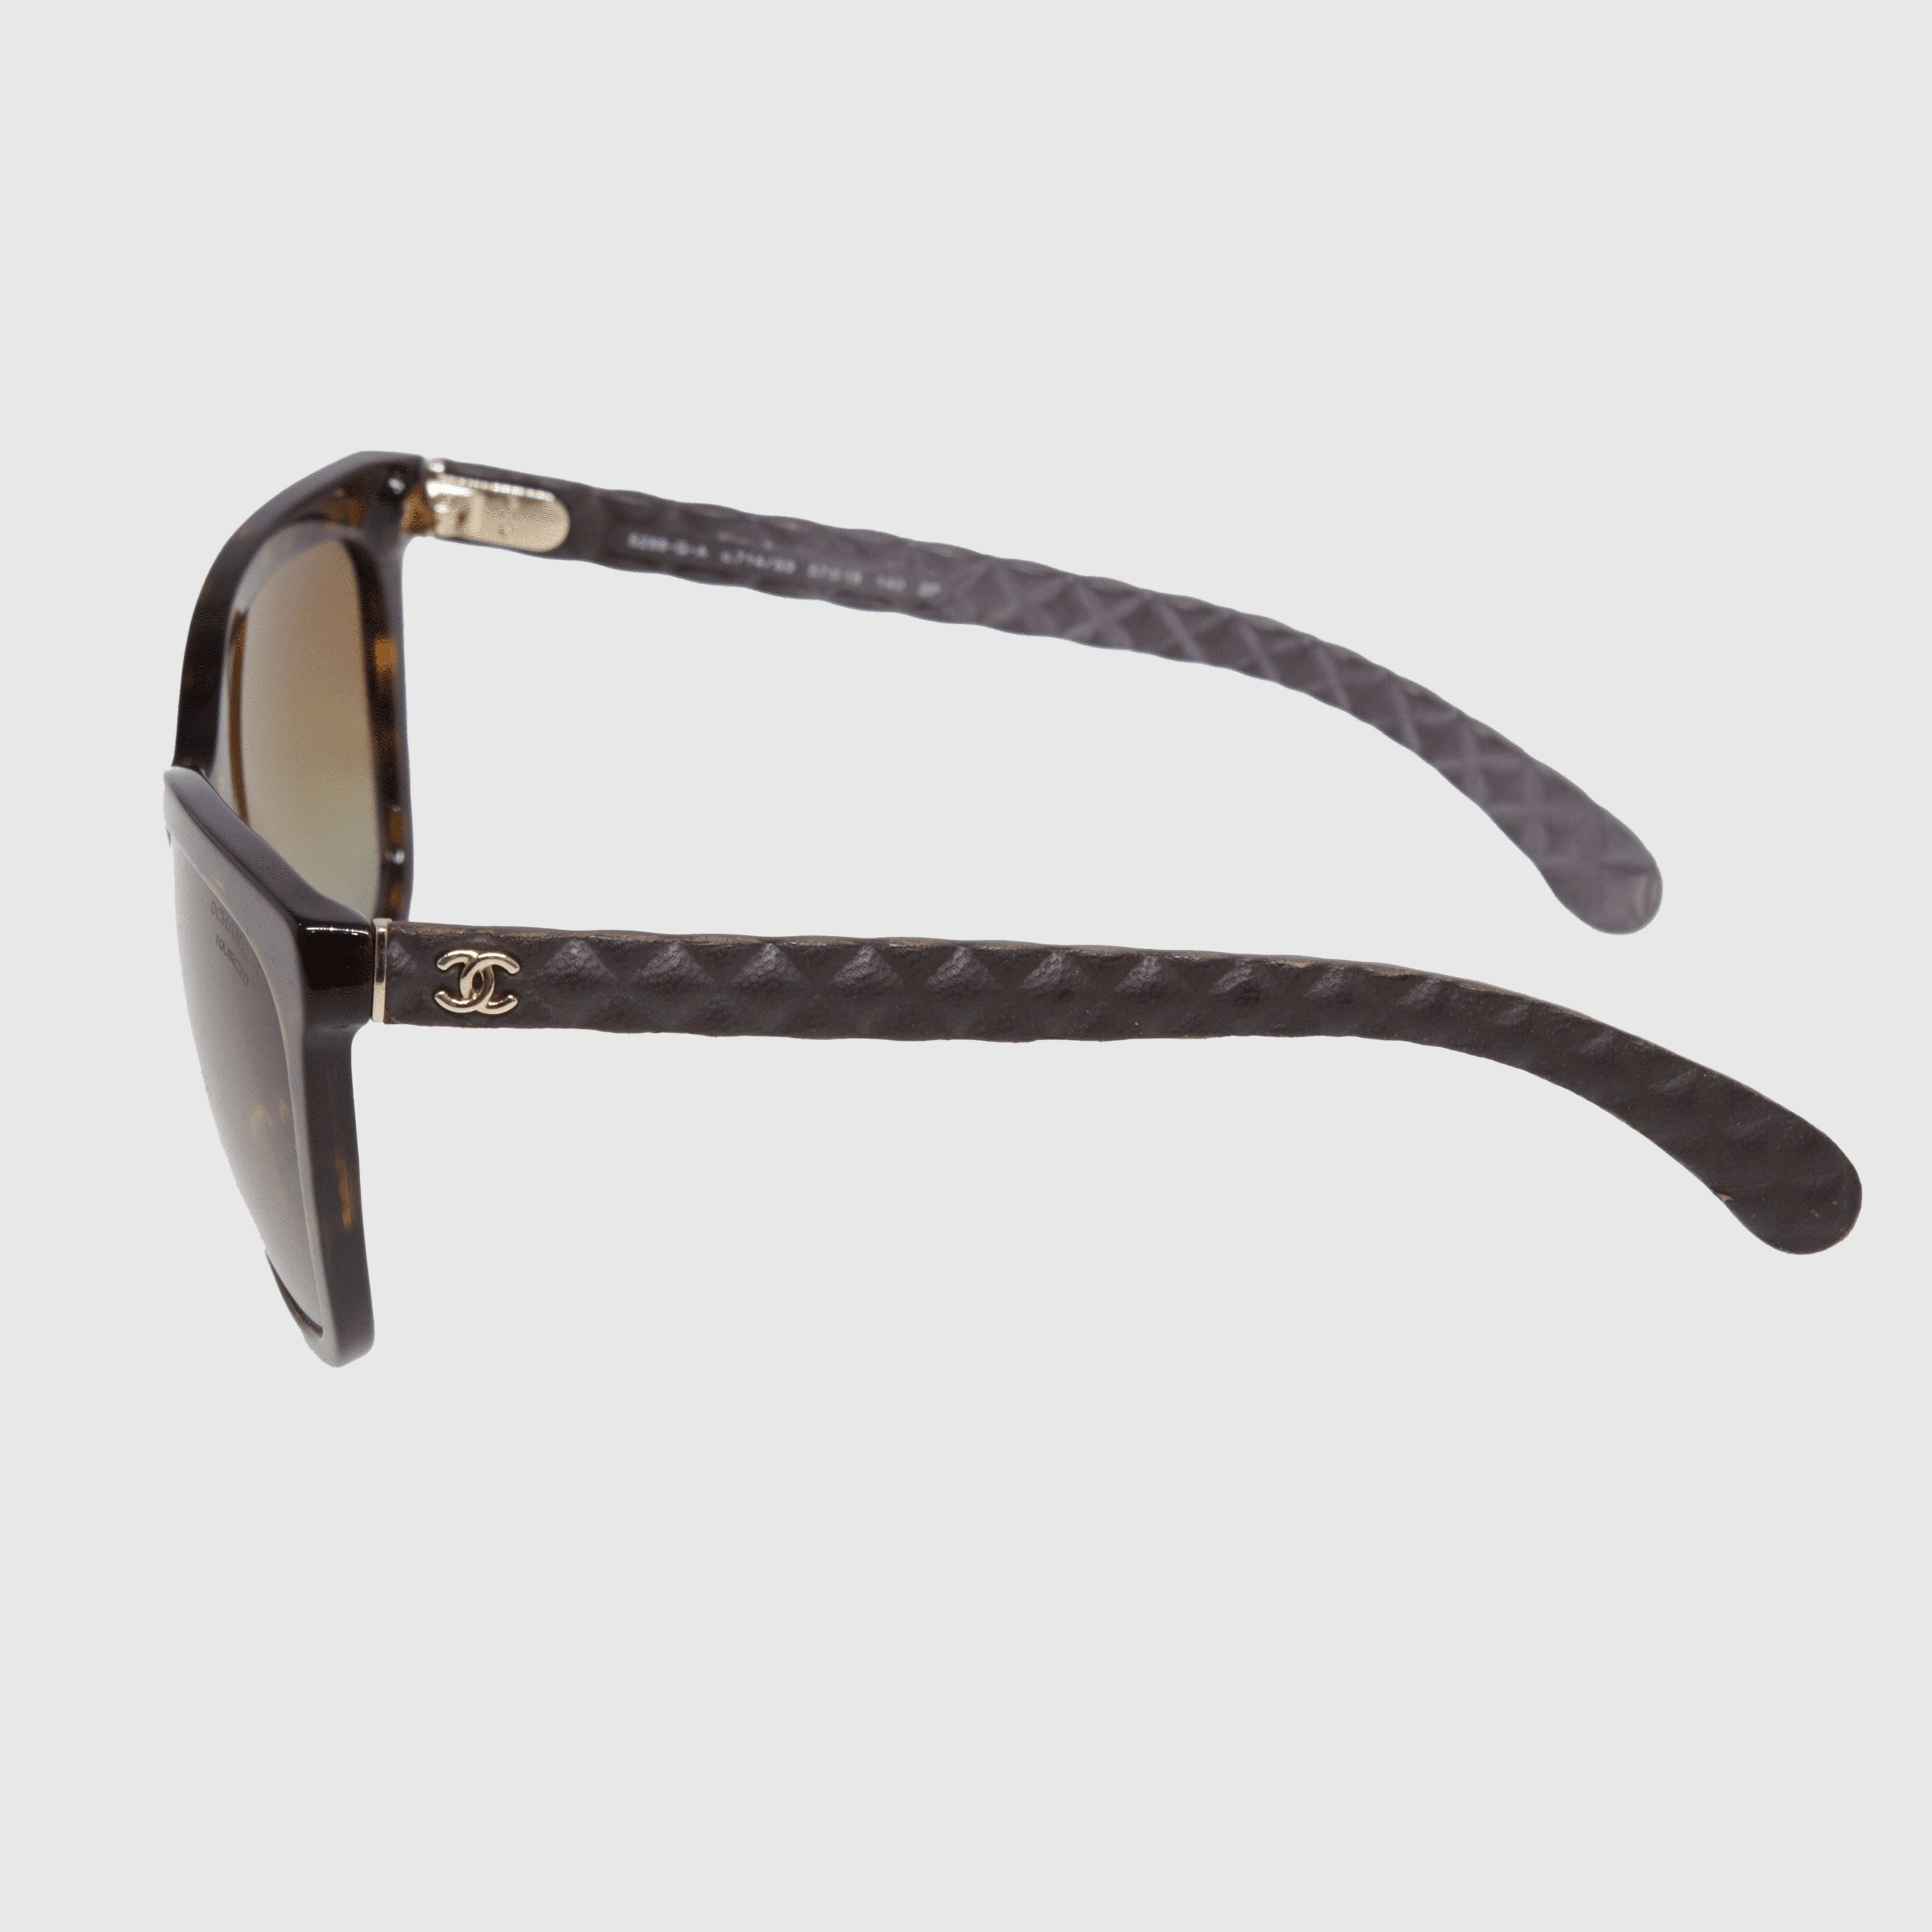 Black/Brown Cat Eye 5288 Polarised Sunglasses Accessories Chanel 